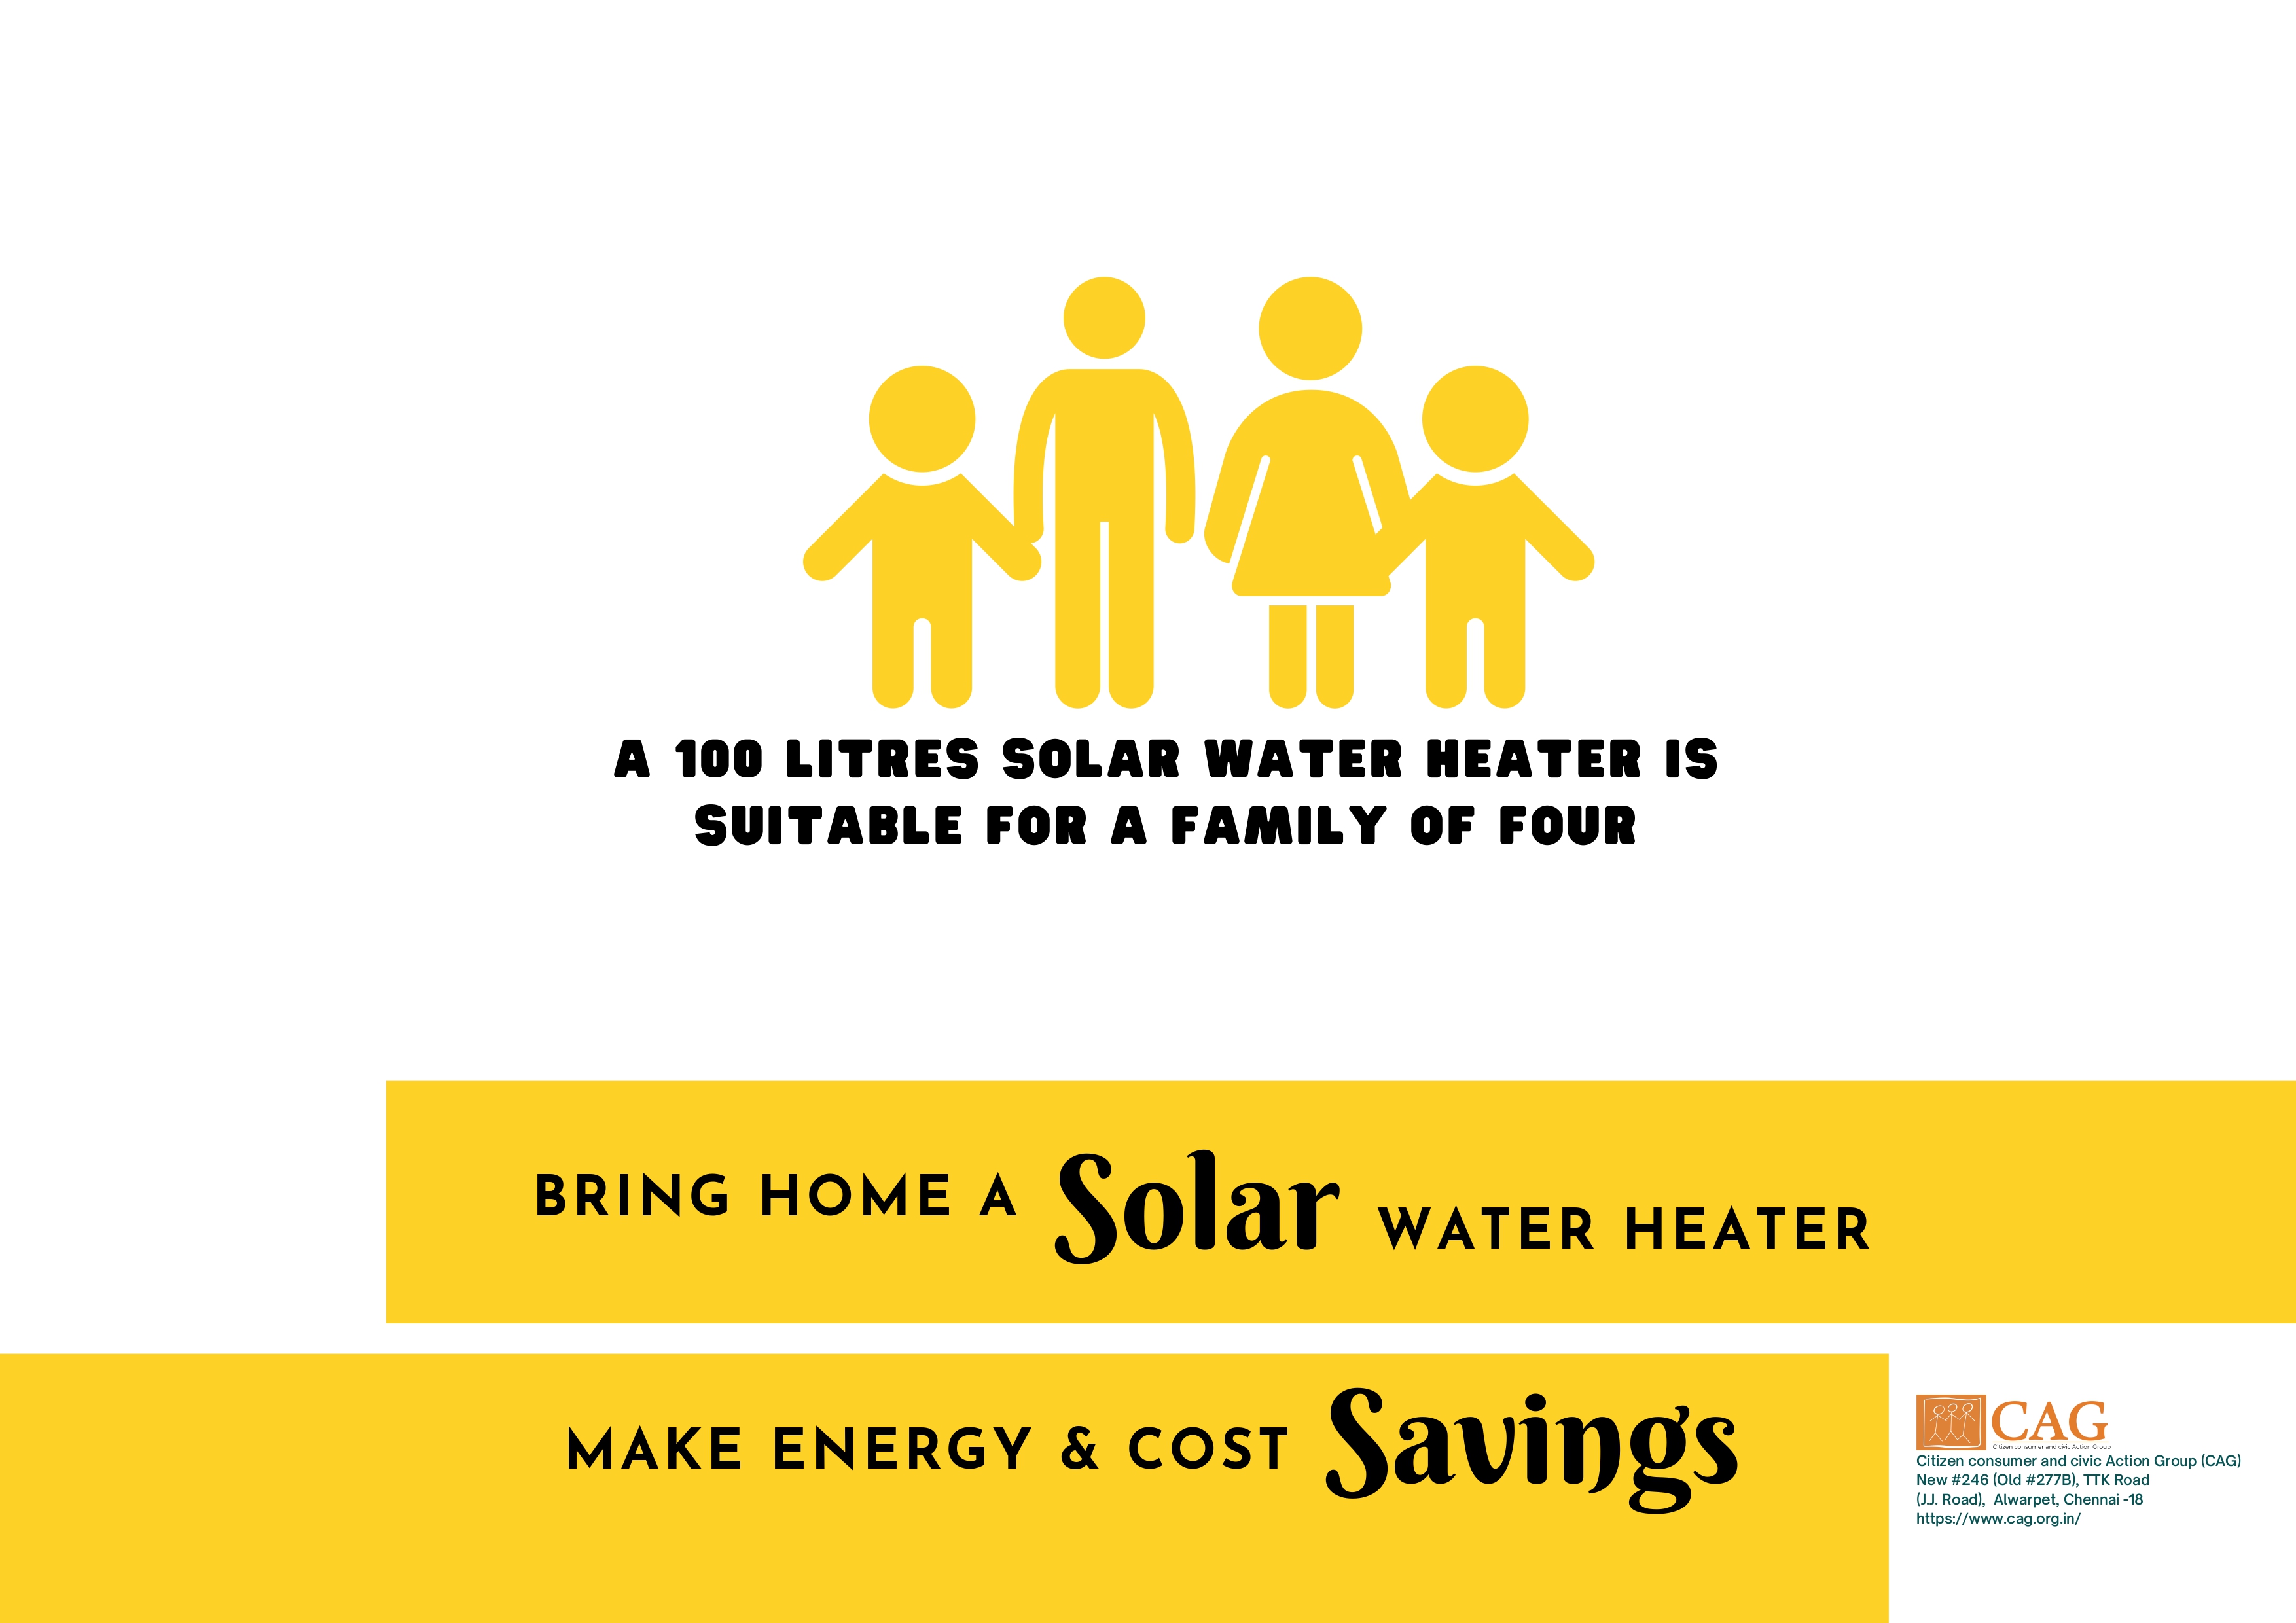 ecc-posters-energy-savings-on-solar-water-heater-cag